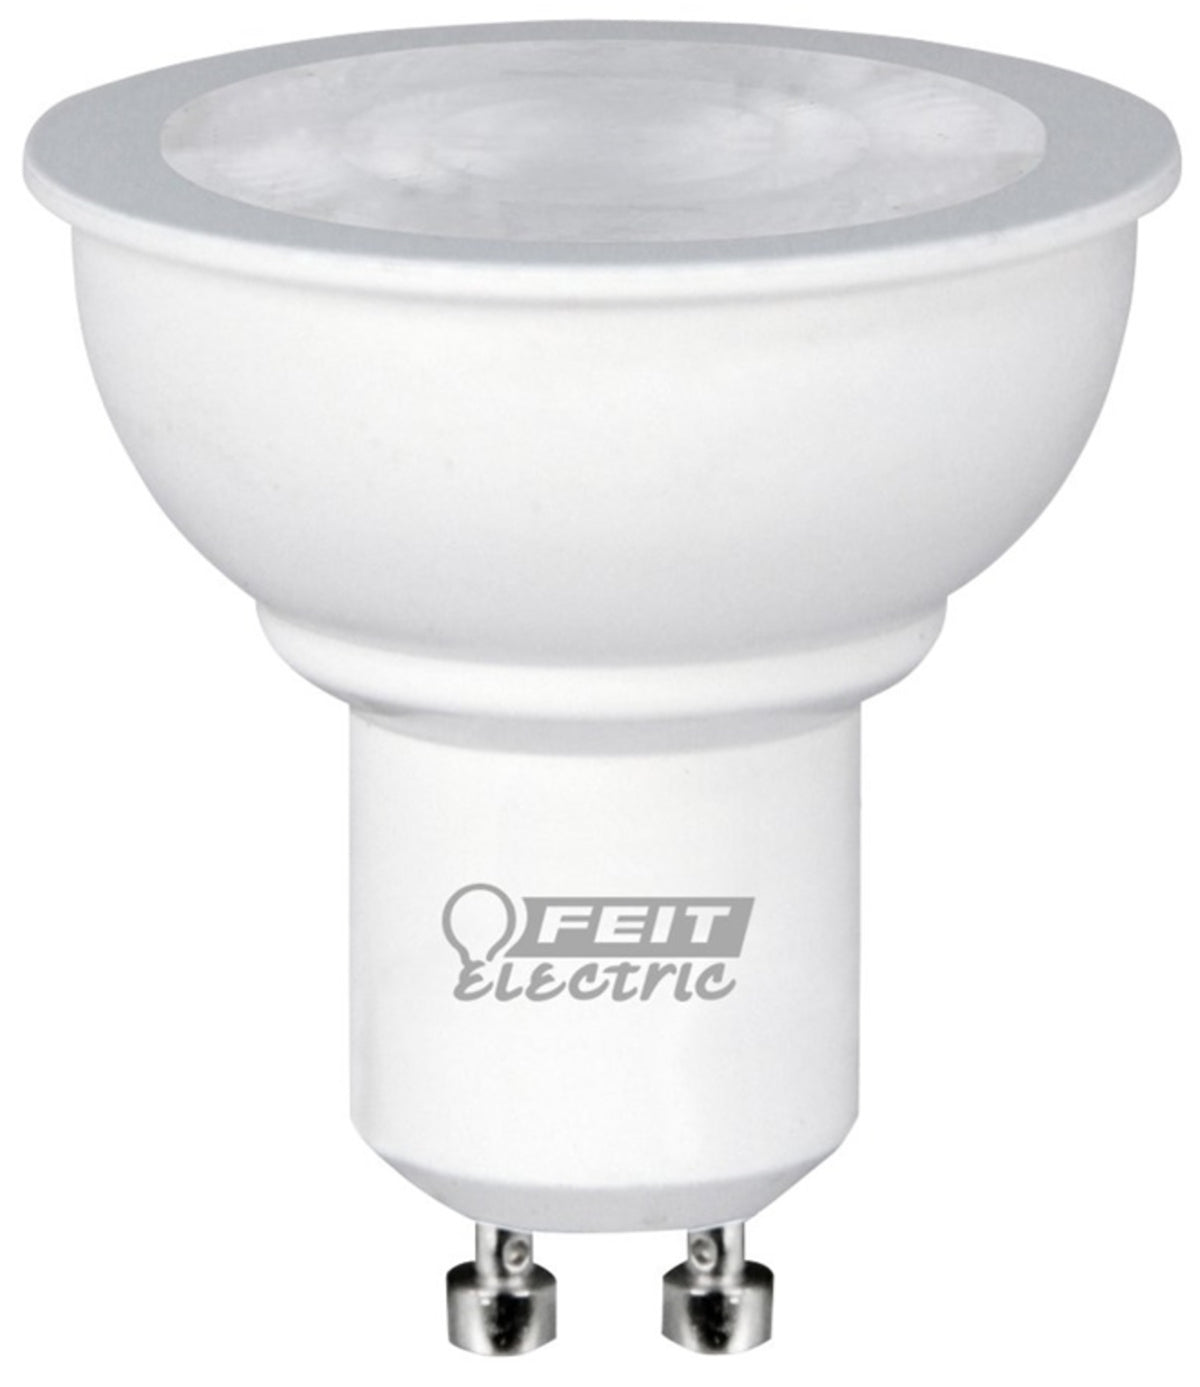 Feit Electric BPMR16GU10/500/95 LED Bulb, 6.6 Watts, 500 Lumens